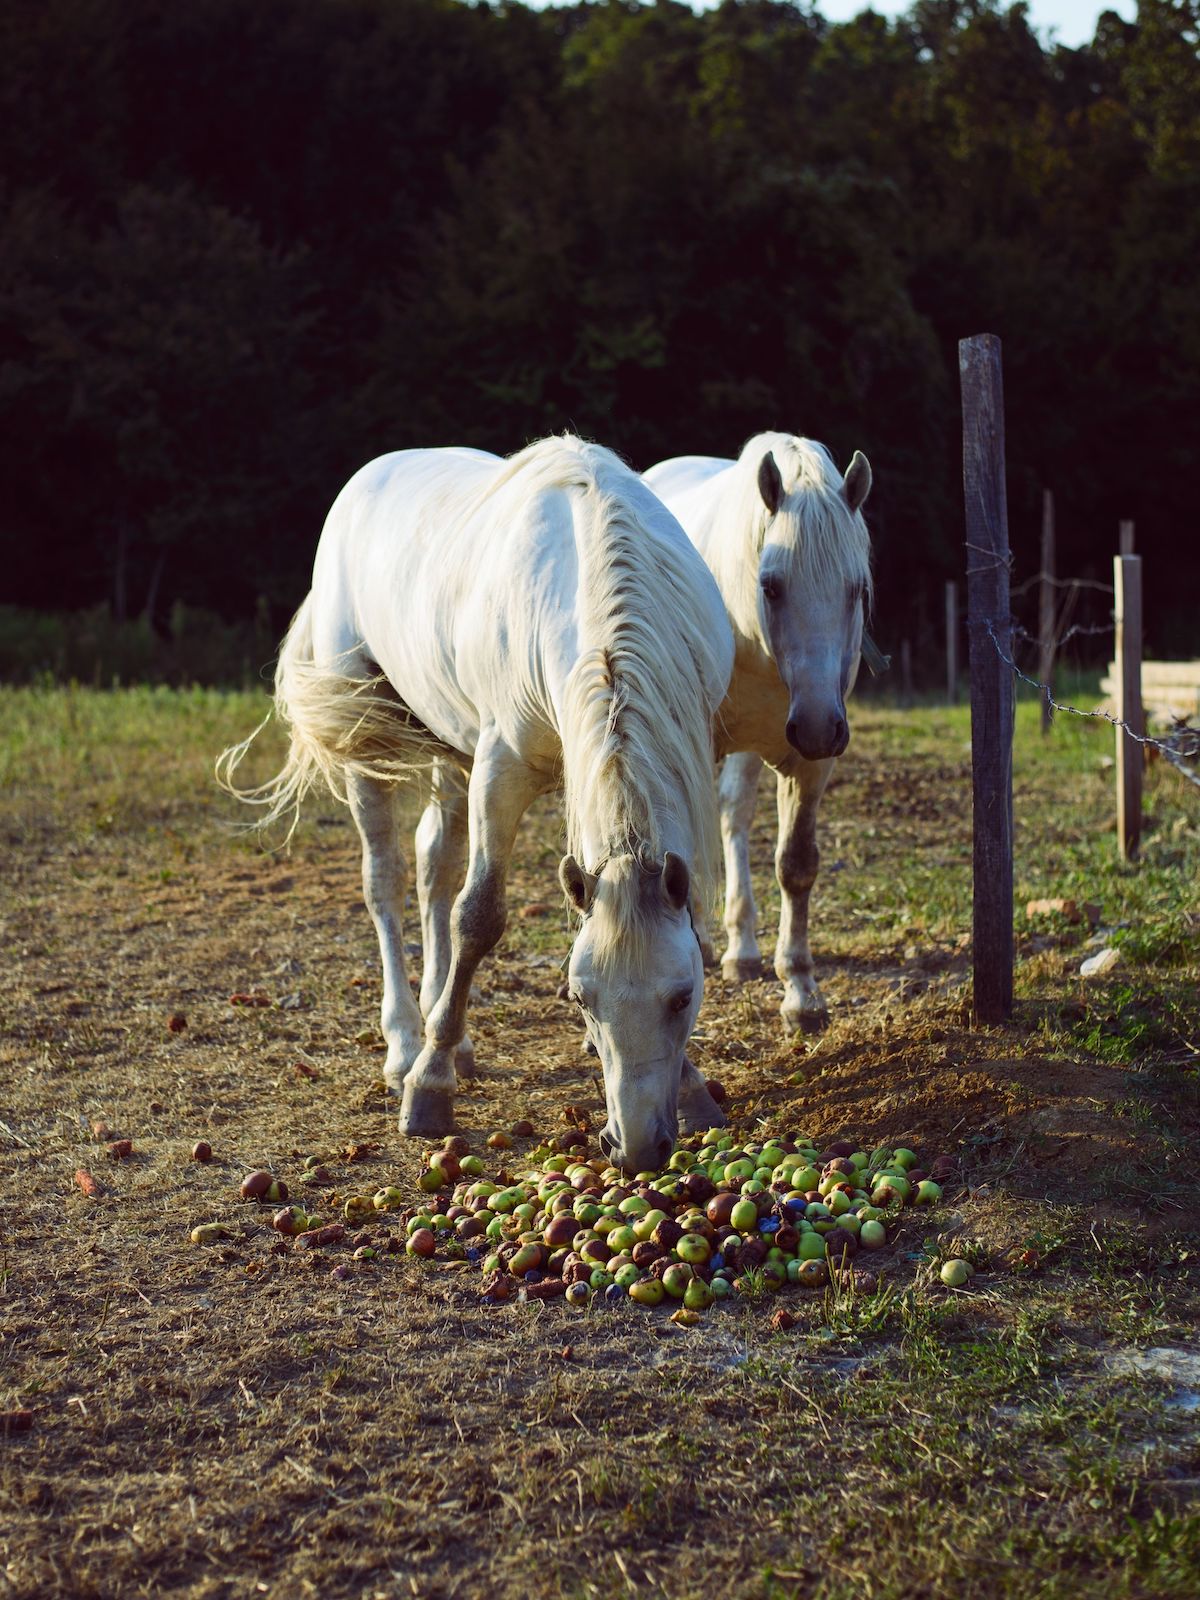 White horses on the field eat apples